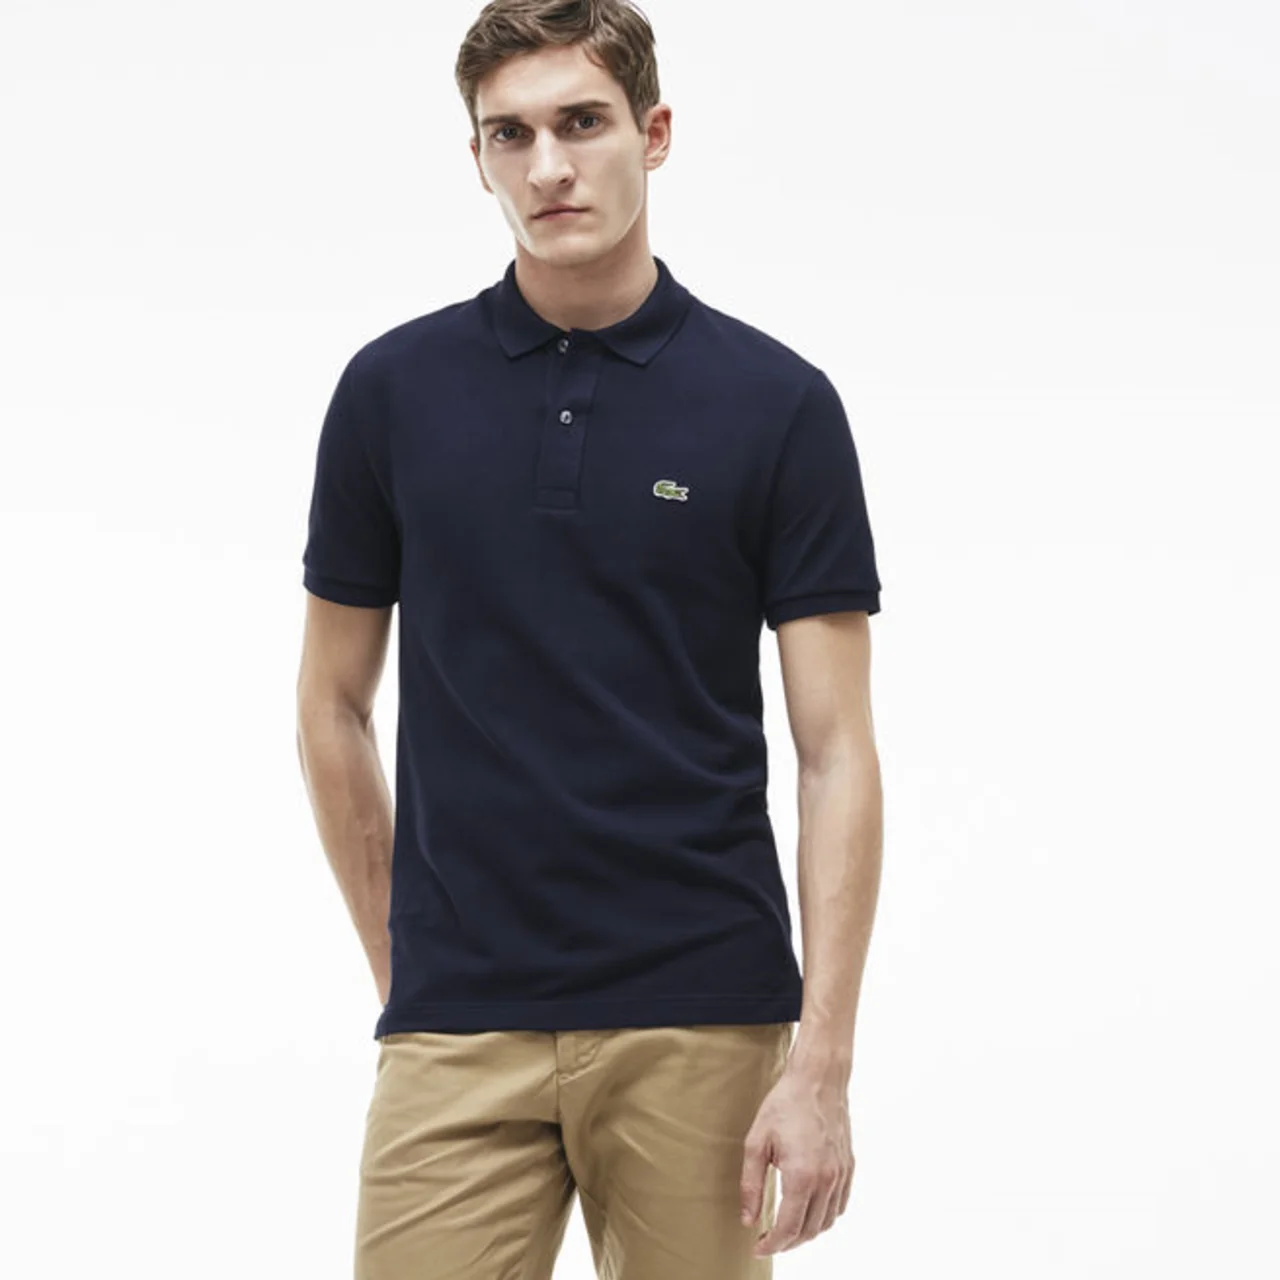 Lacoste Men's Slim Fit Polo Navy Blue